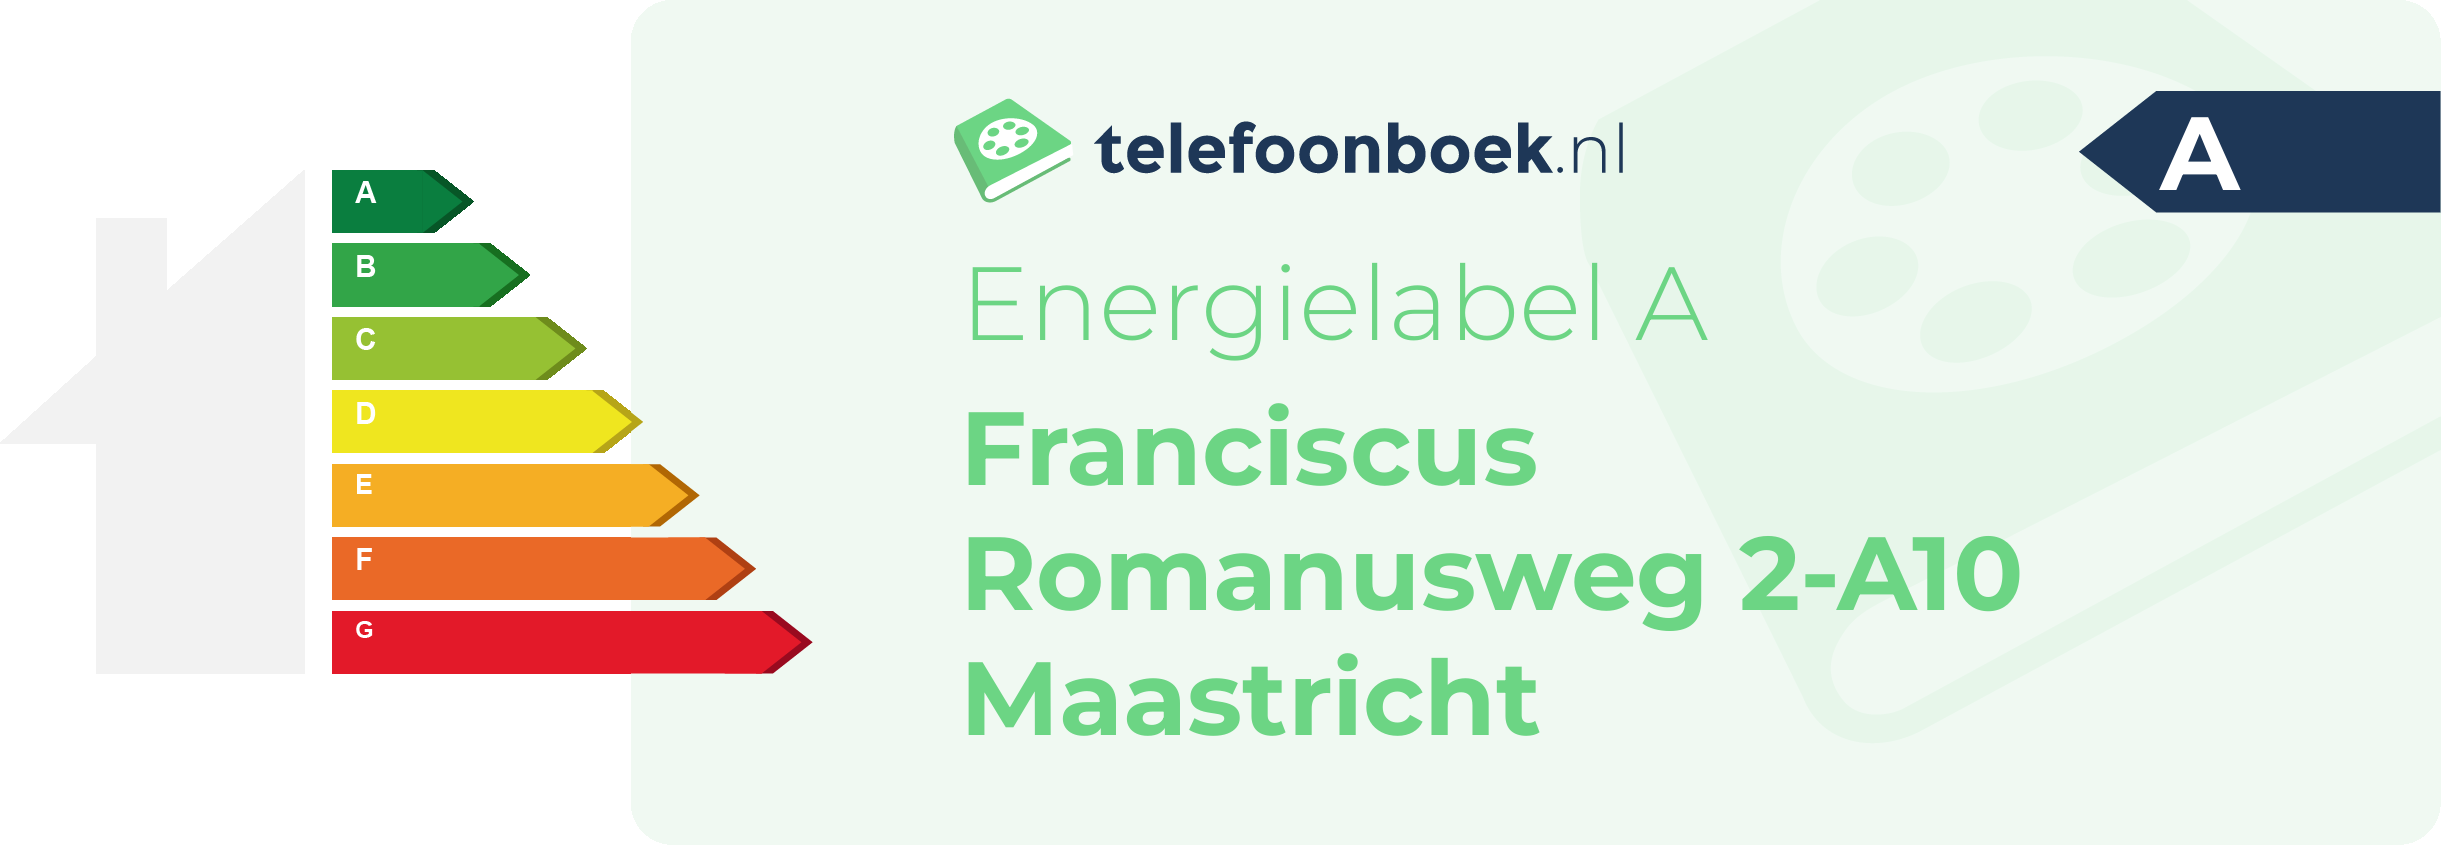 Energielabel Franciscus Romanusweg 2-A10 Maastricht